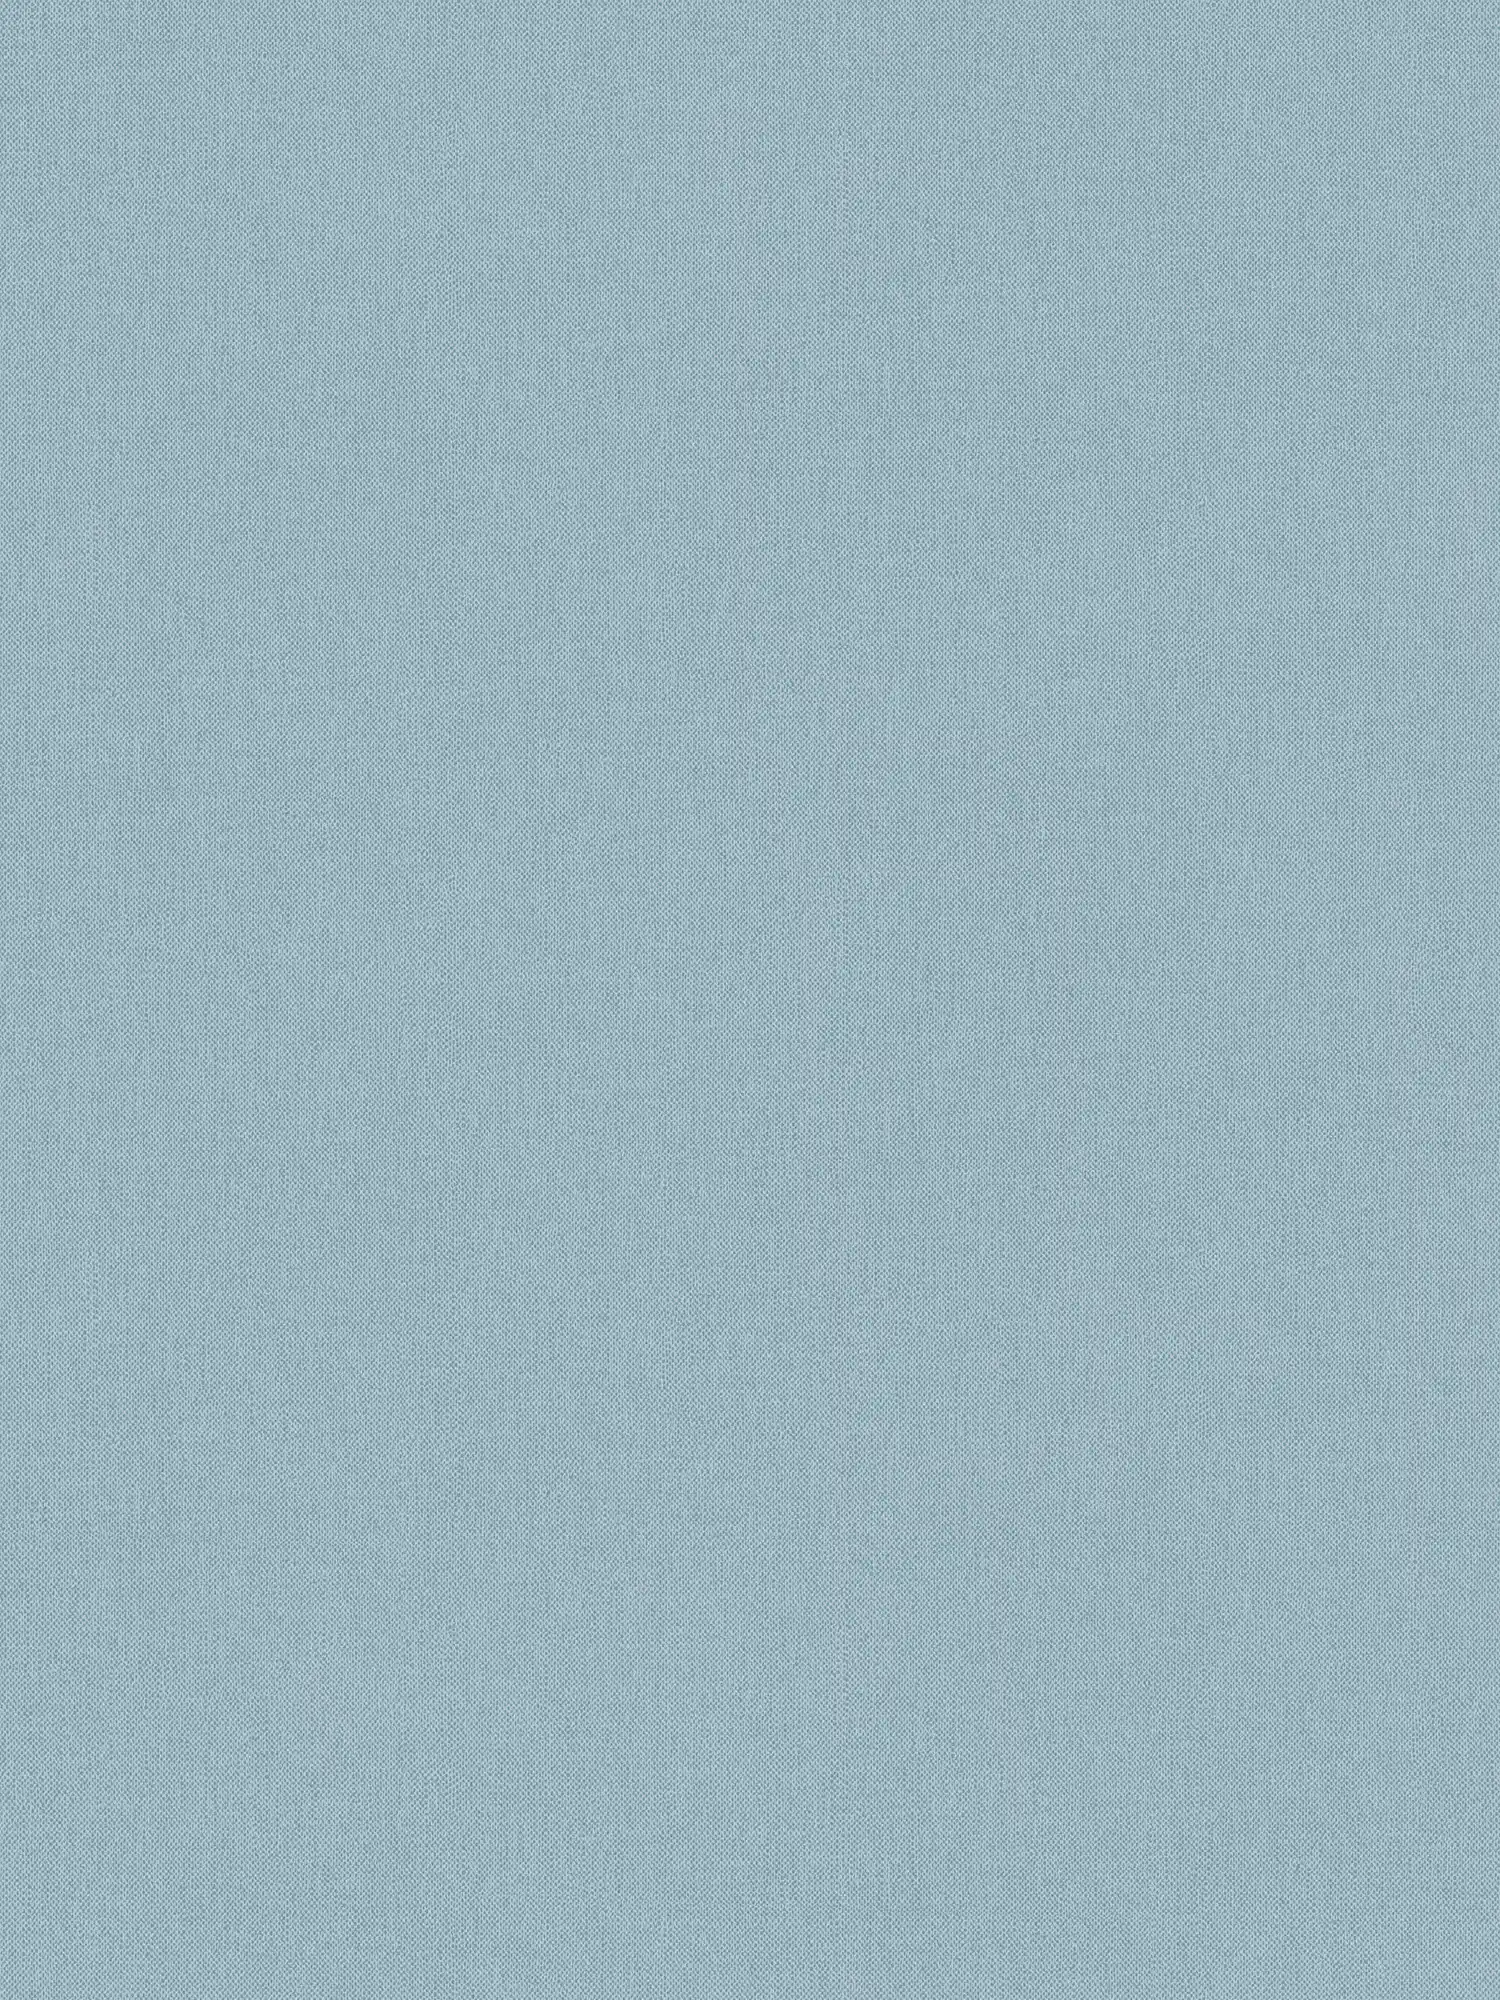 Wallpaper blue grey with fabric texture & matte colour - blue
